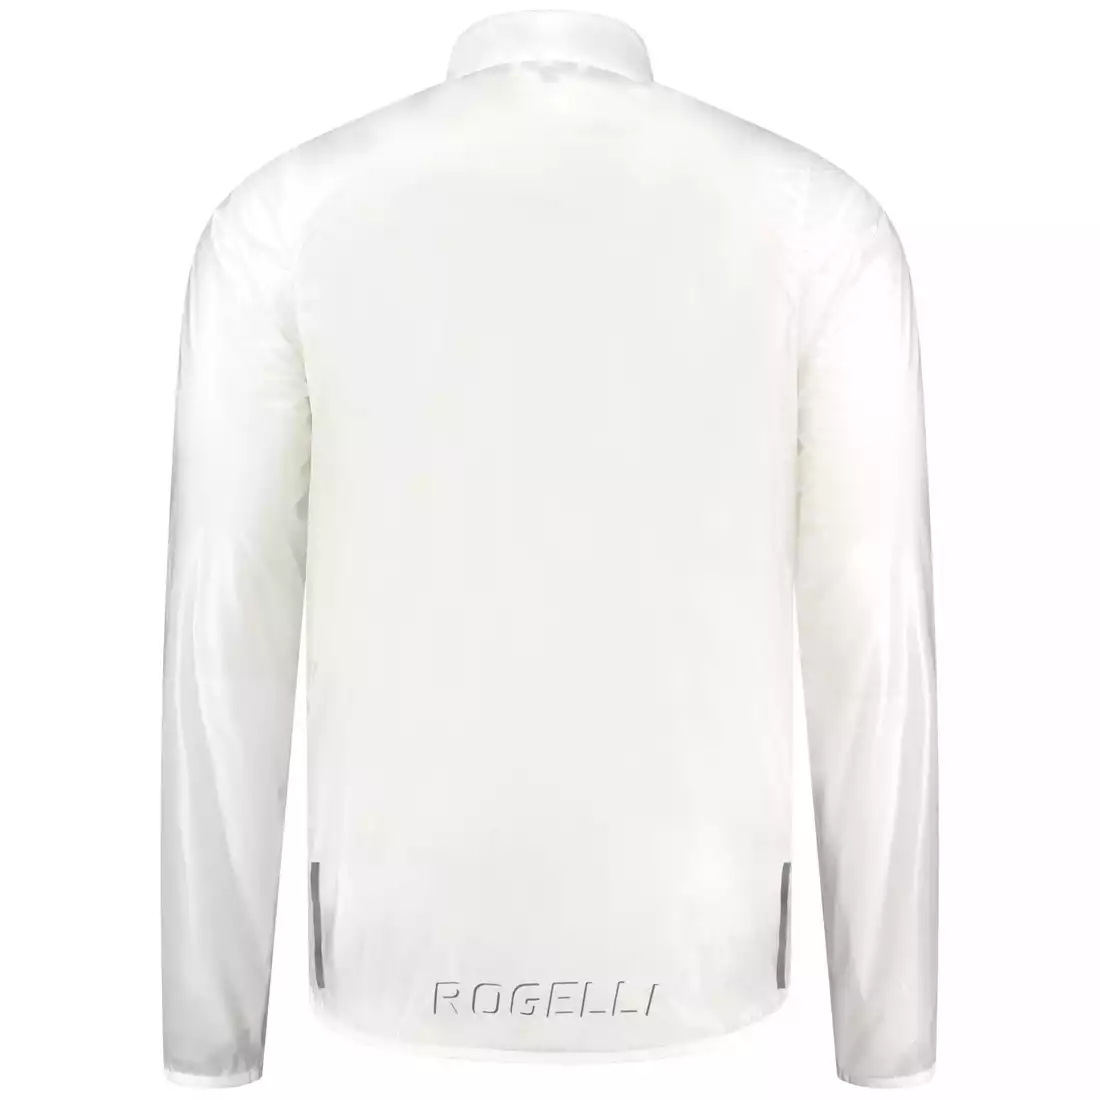 ROGELLI EMERGENCY children's rain jacket, white, transparent